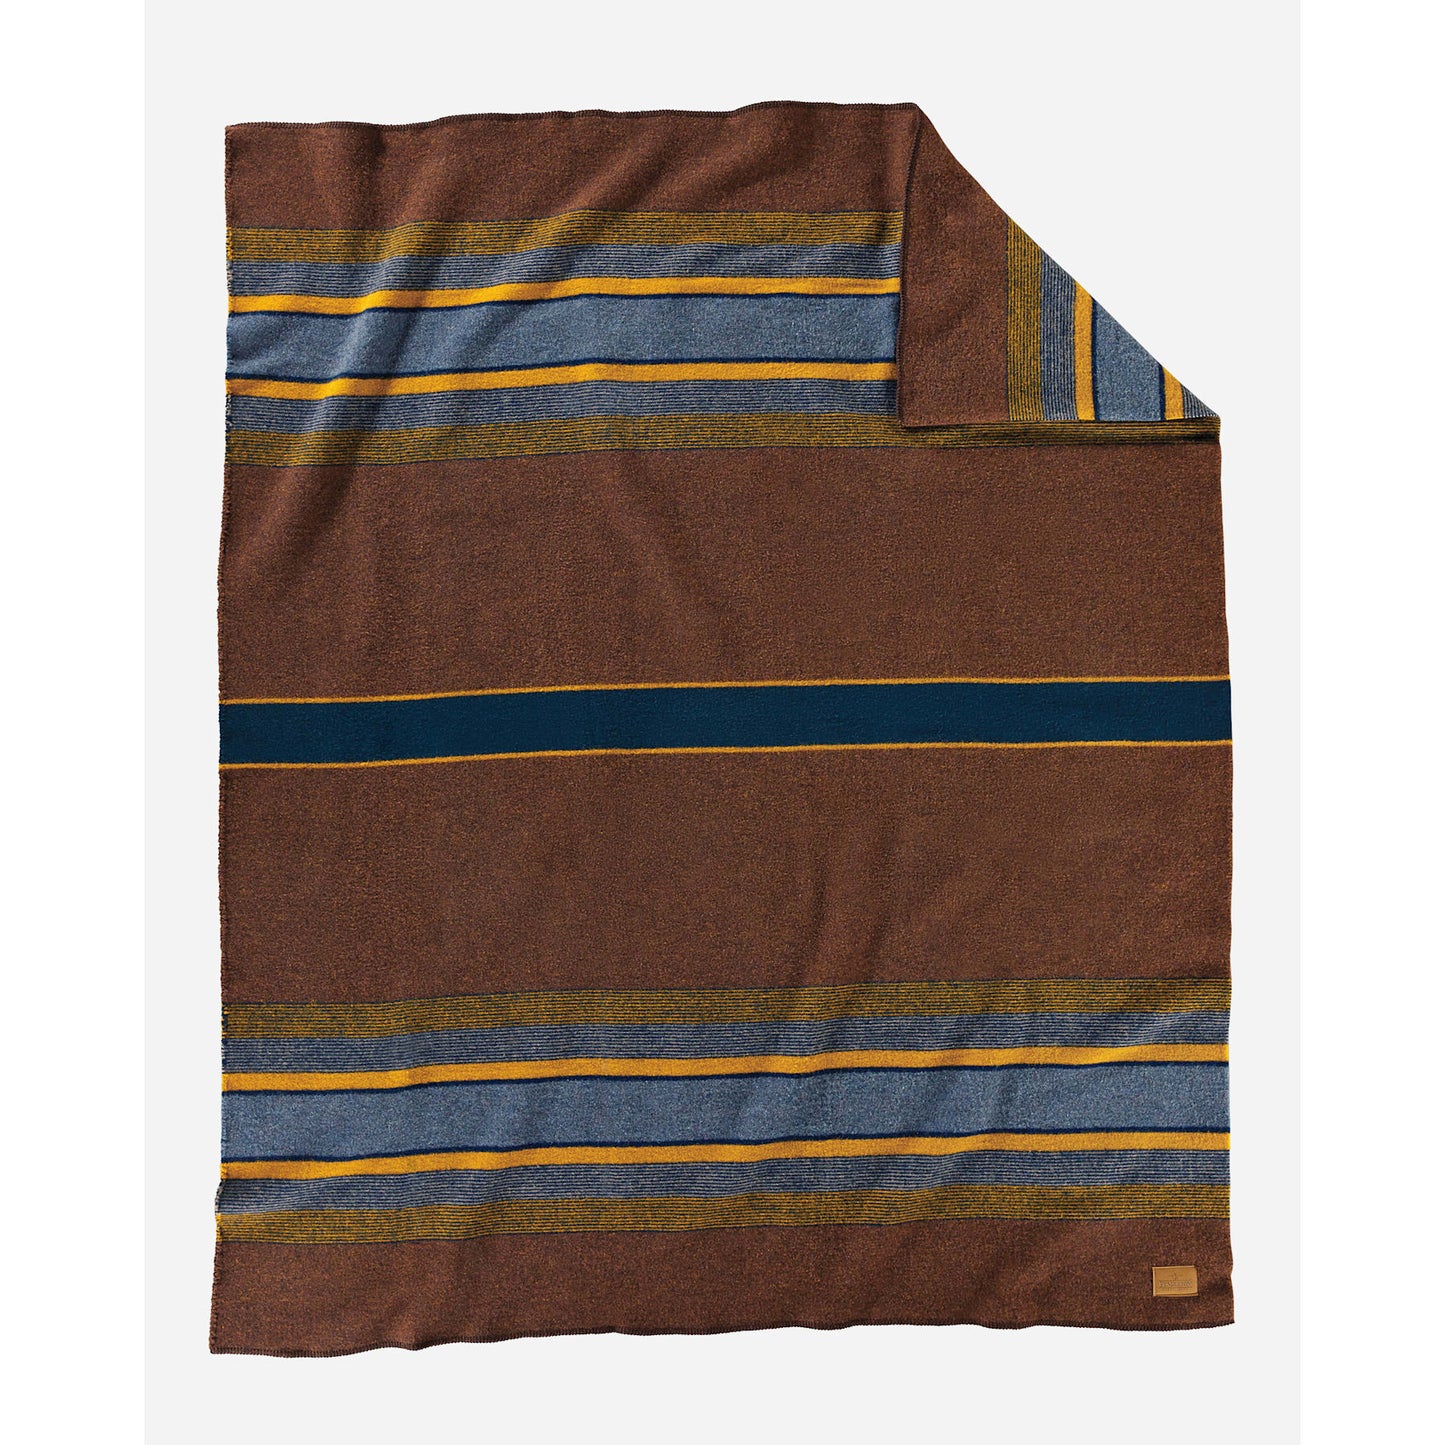 Pendleton Camp Blankets, High Ridge, brown/blue/yellow stripes, folded view